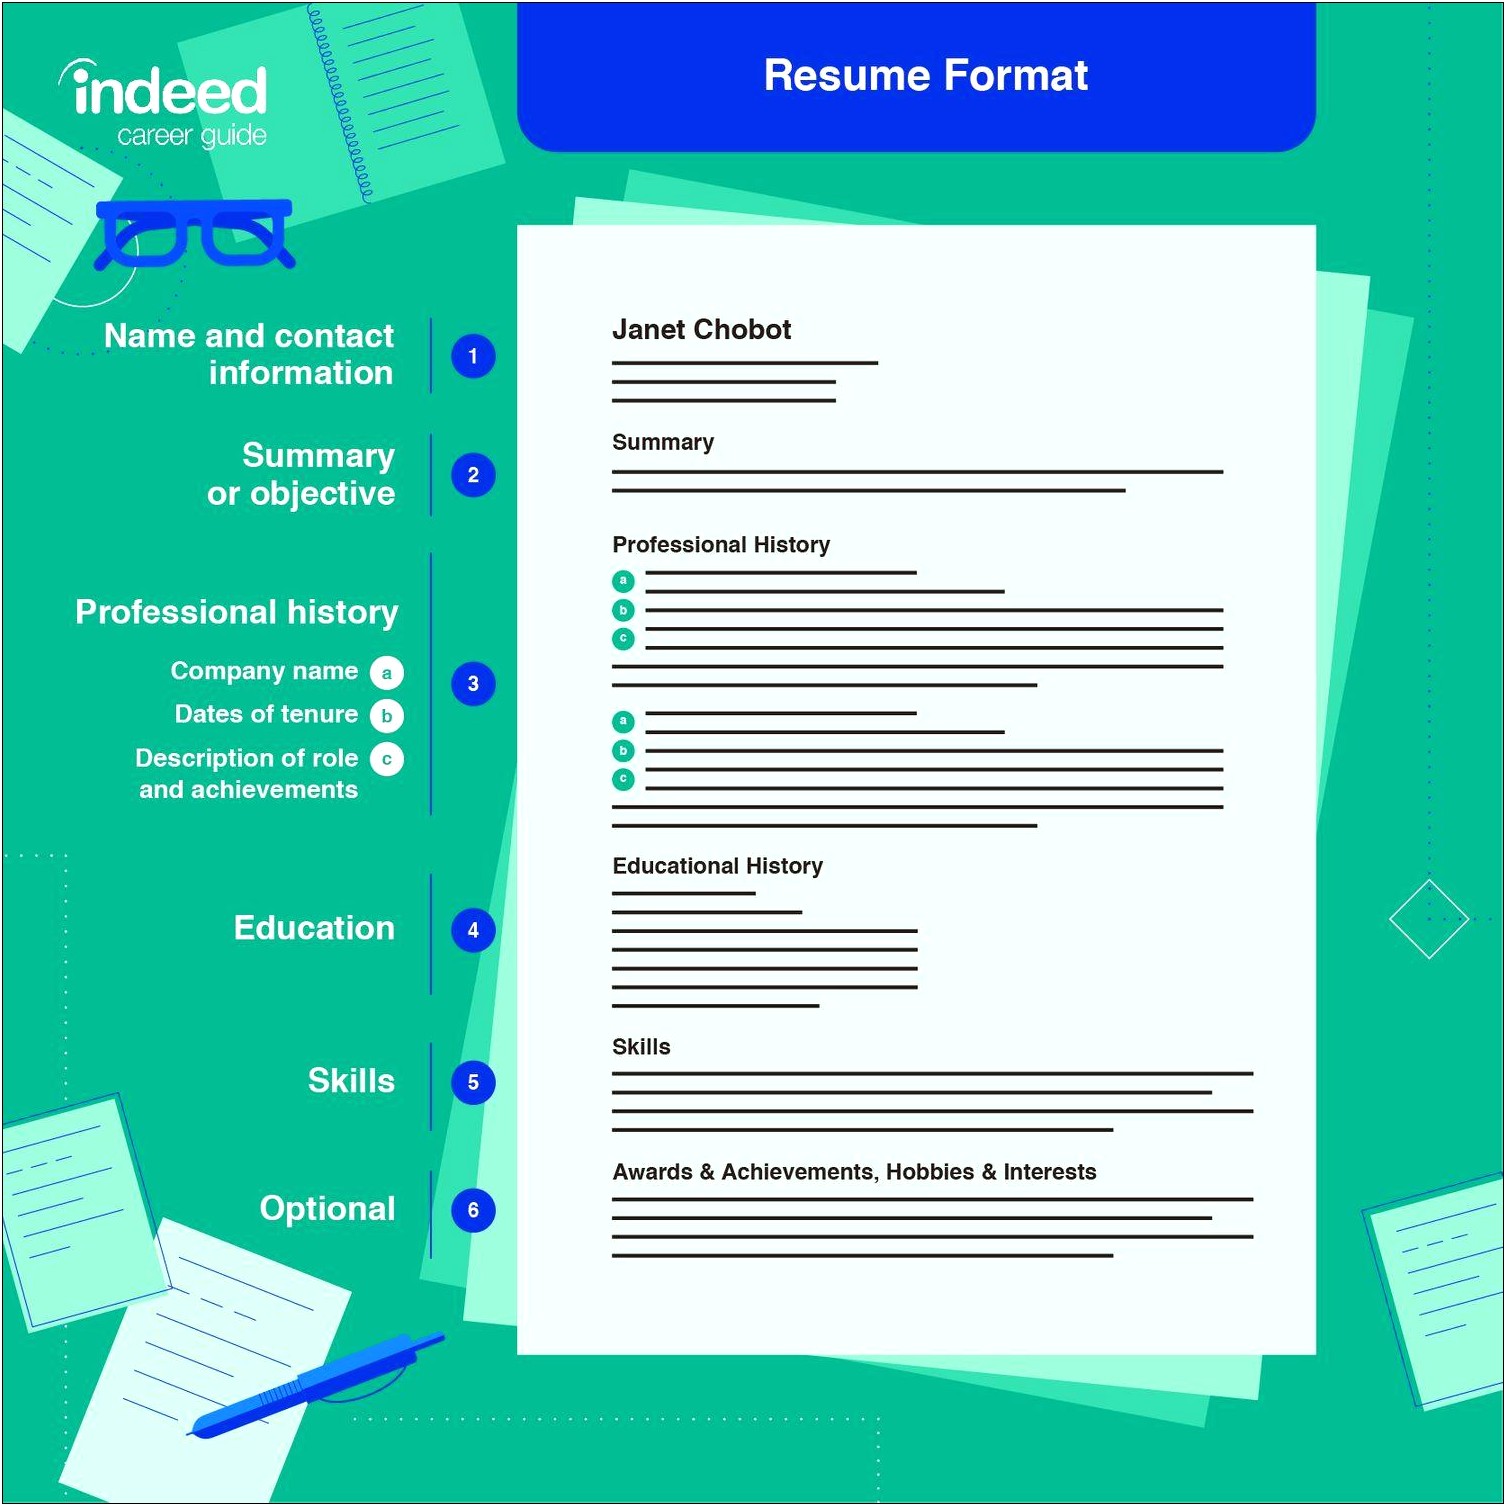 Resume Similar To Job Application